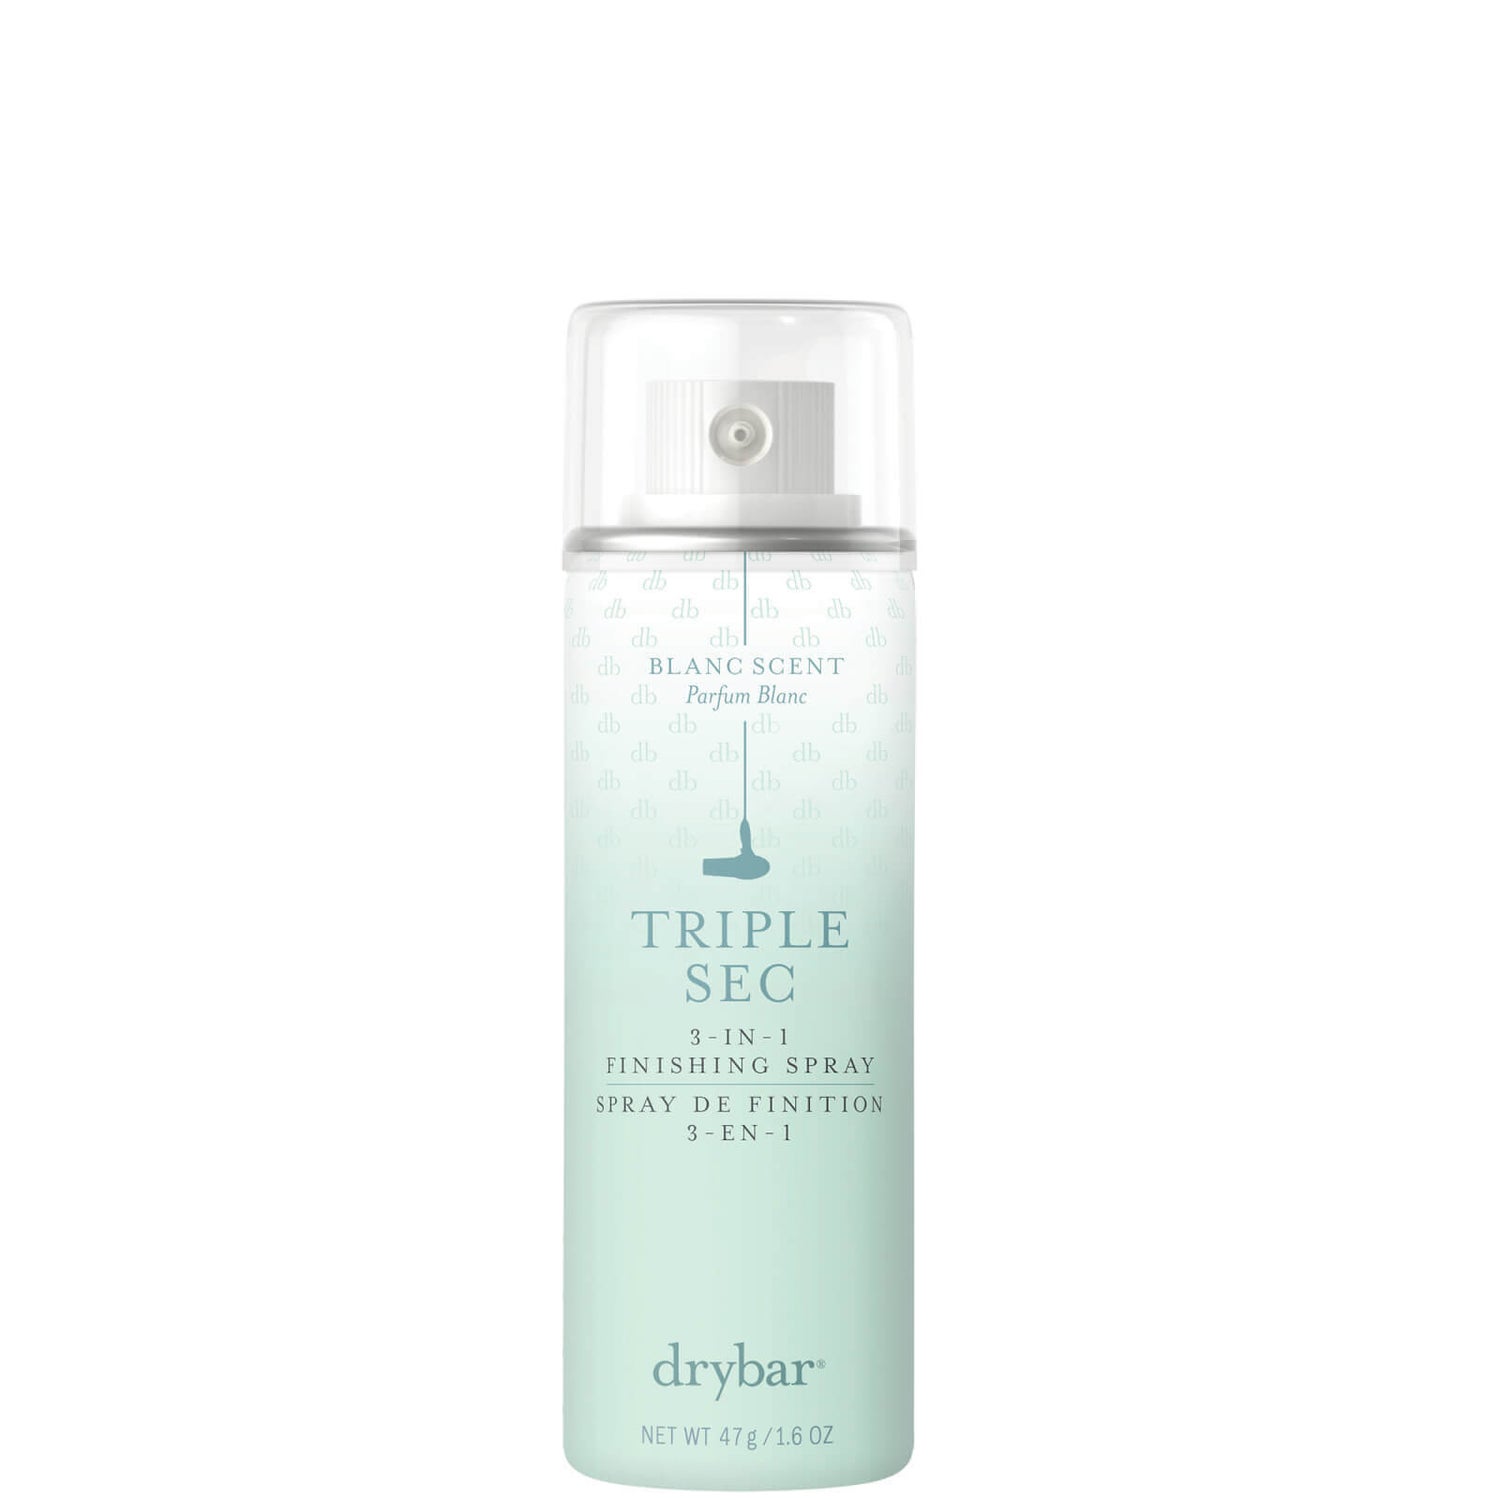 Drybar Triple Sec 3-In-1 Finishing Spray Blanc Scent Travel Size 47g